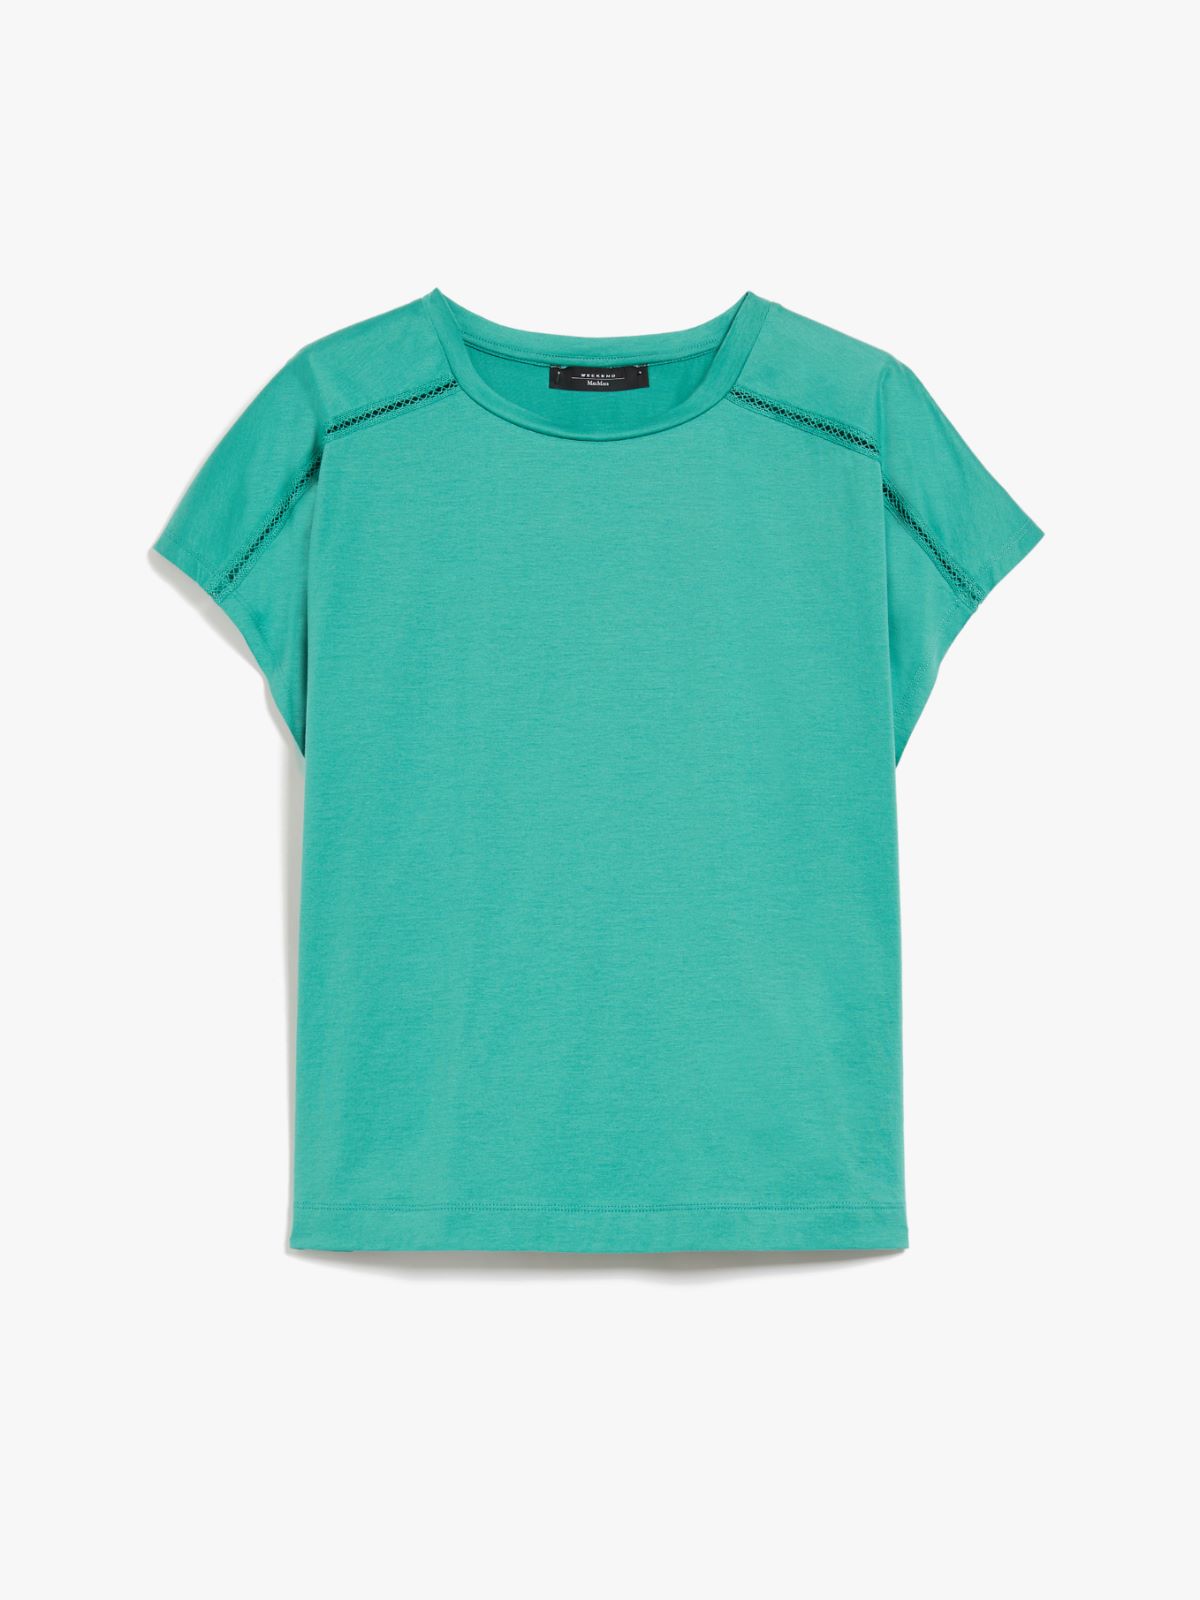 T-shirt in cotton jersey - GREEN - Weekend Max Mara - 6